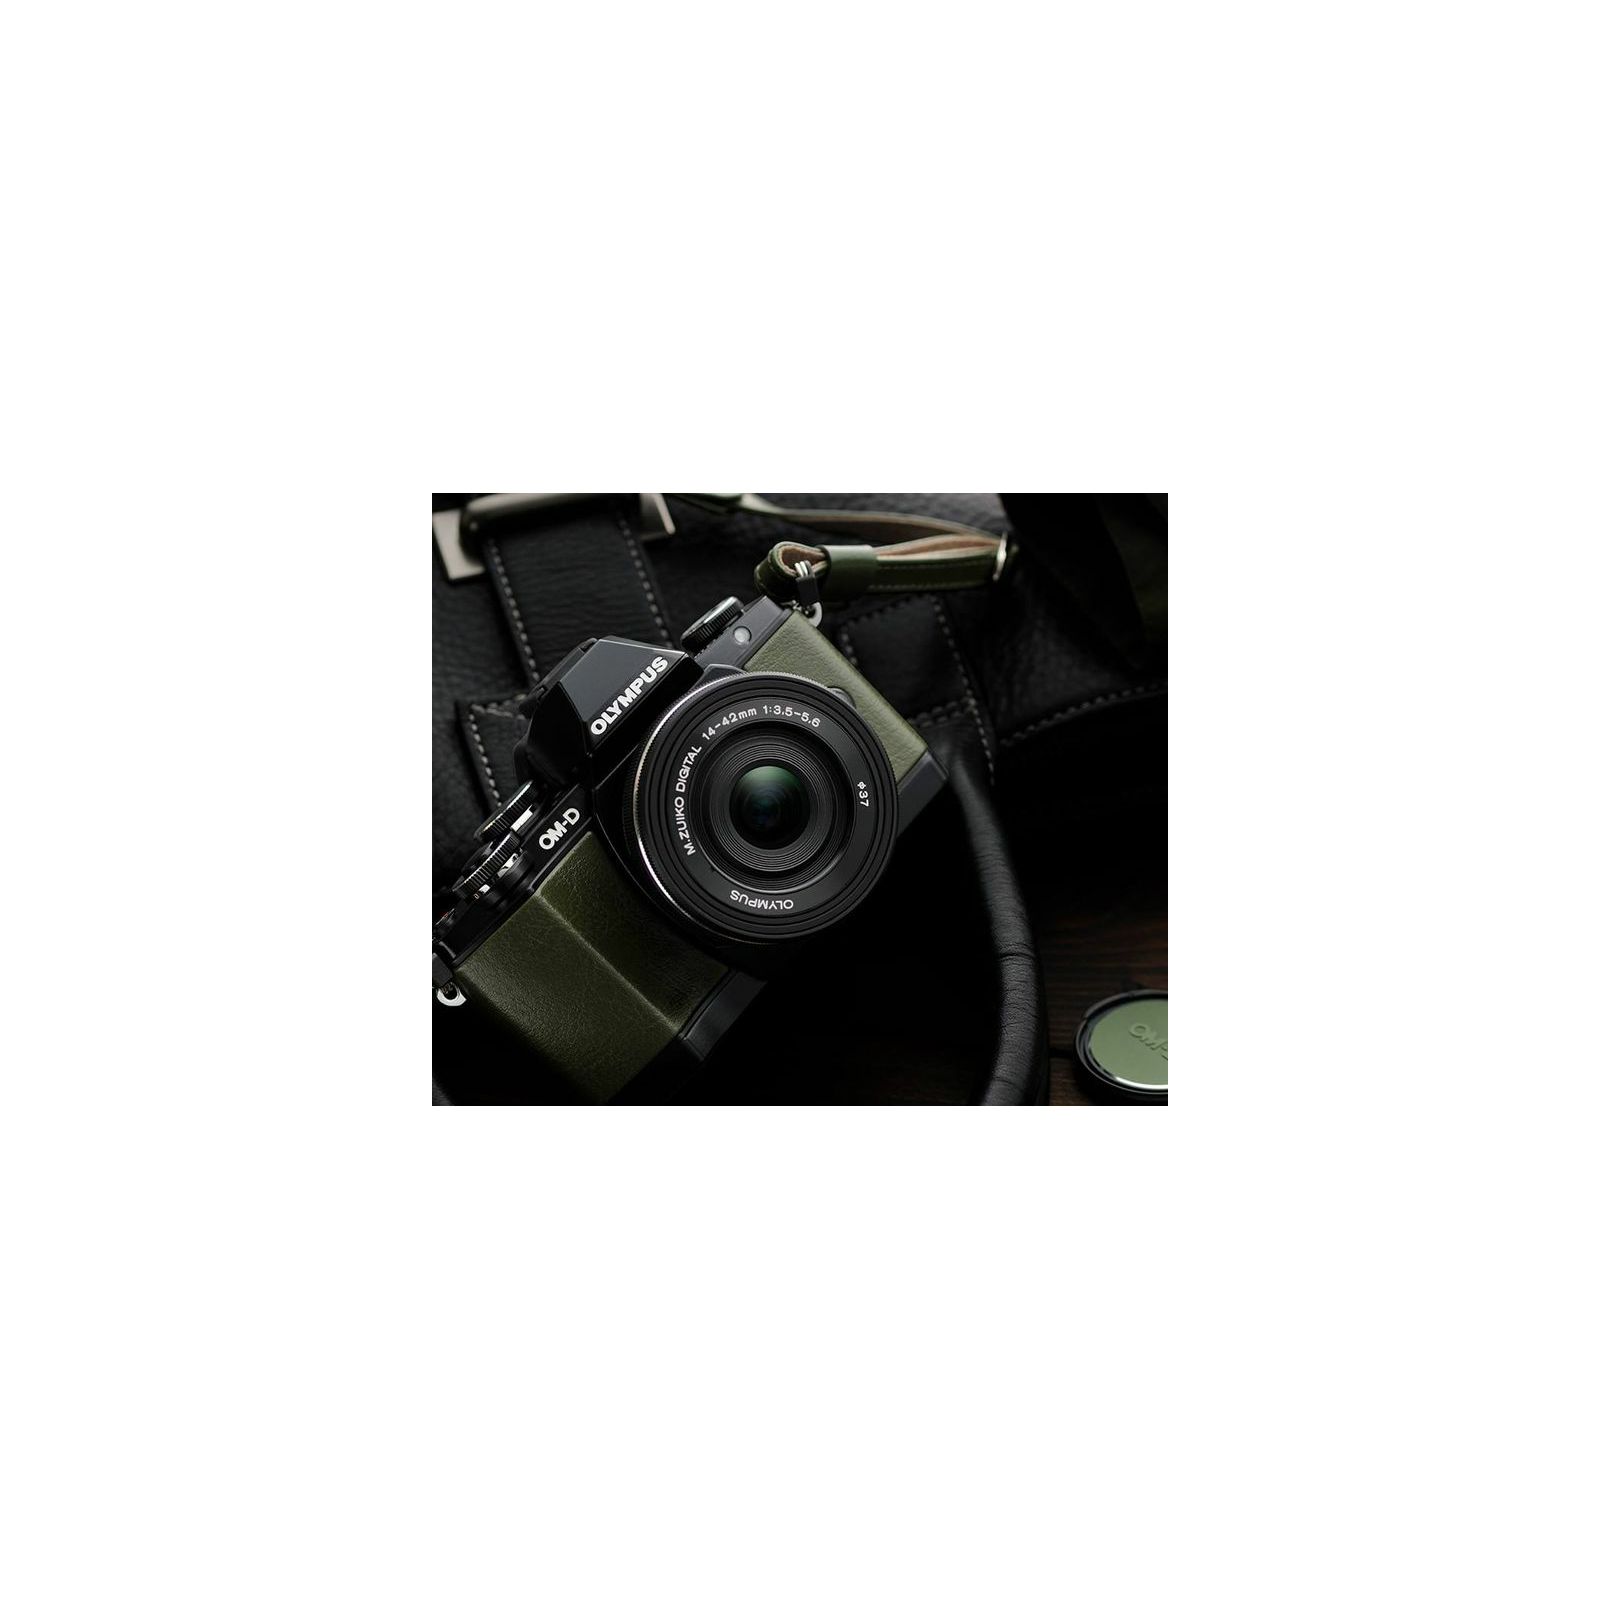 Olympus E-M10 Limited Edition Kit green/green / E-M10 black + EZ-M1442EZ black incl. Charger & Battery, lens cap & strap Micro Four Thirds MFT - OM-D Camera digitalni fotoaparat V207026EE000